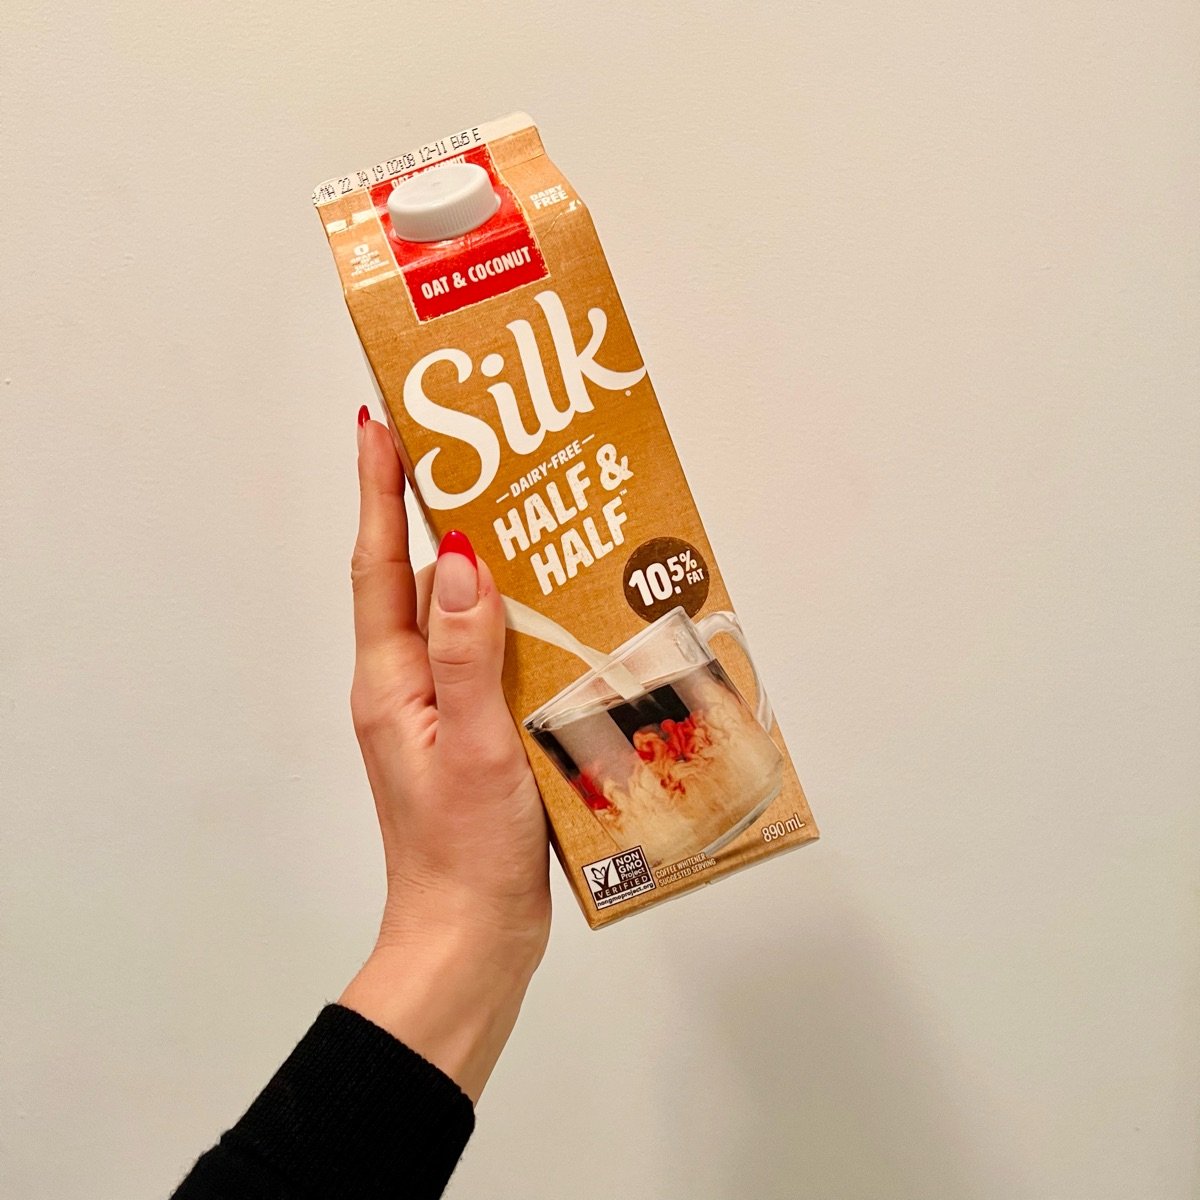 Silk Dairy Free Half & Half Reviews & Information (Vegan & Keto)